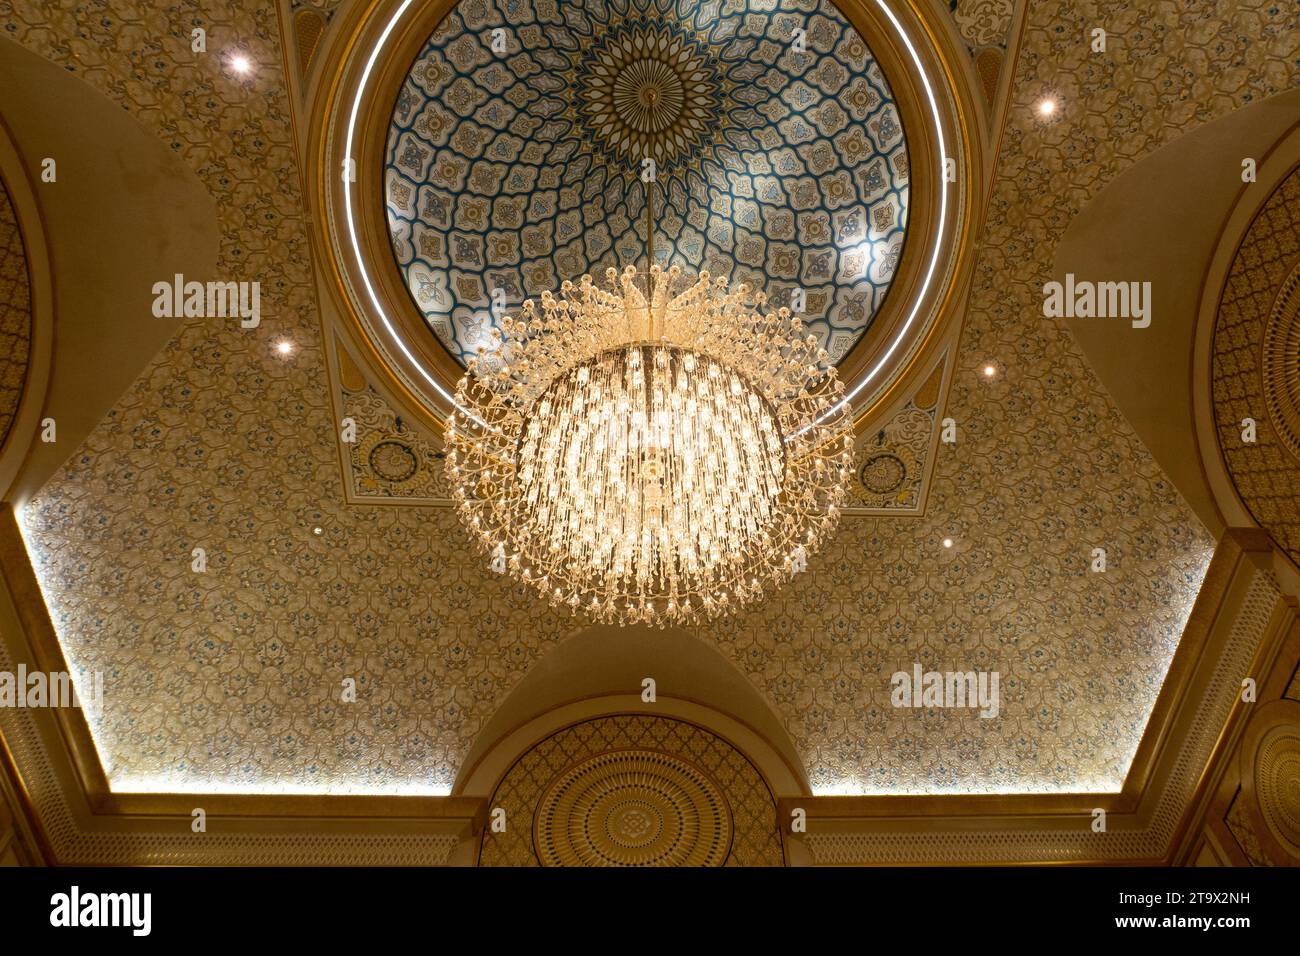 Abu Dhabi, UAE, 08.02.2020. UAE Presidential Palace Qasr Al Watan, opened to public, view of priceless chandelier with Swarovski crystals. Stock Photo